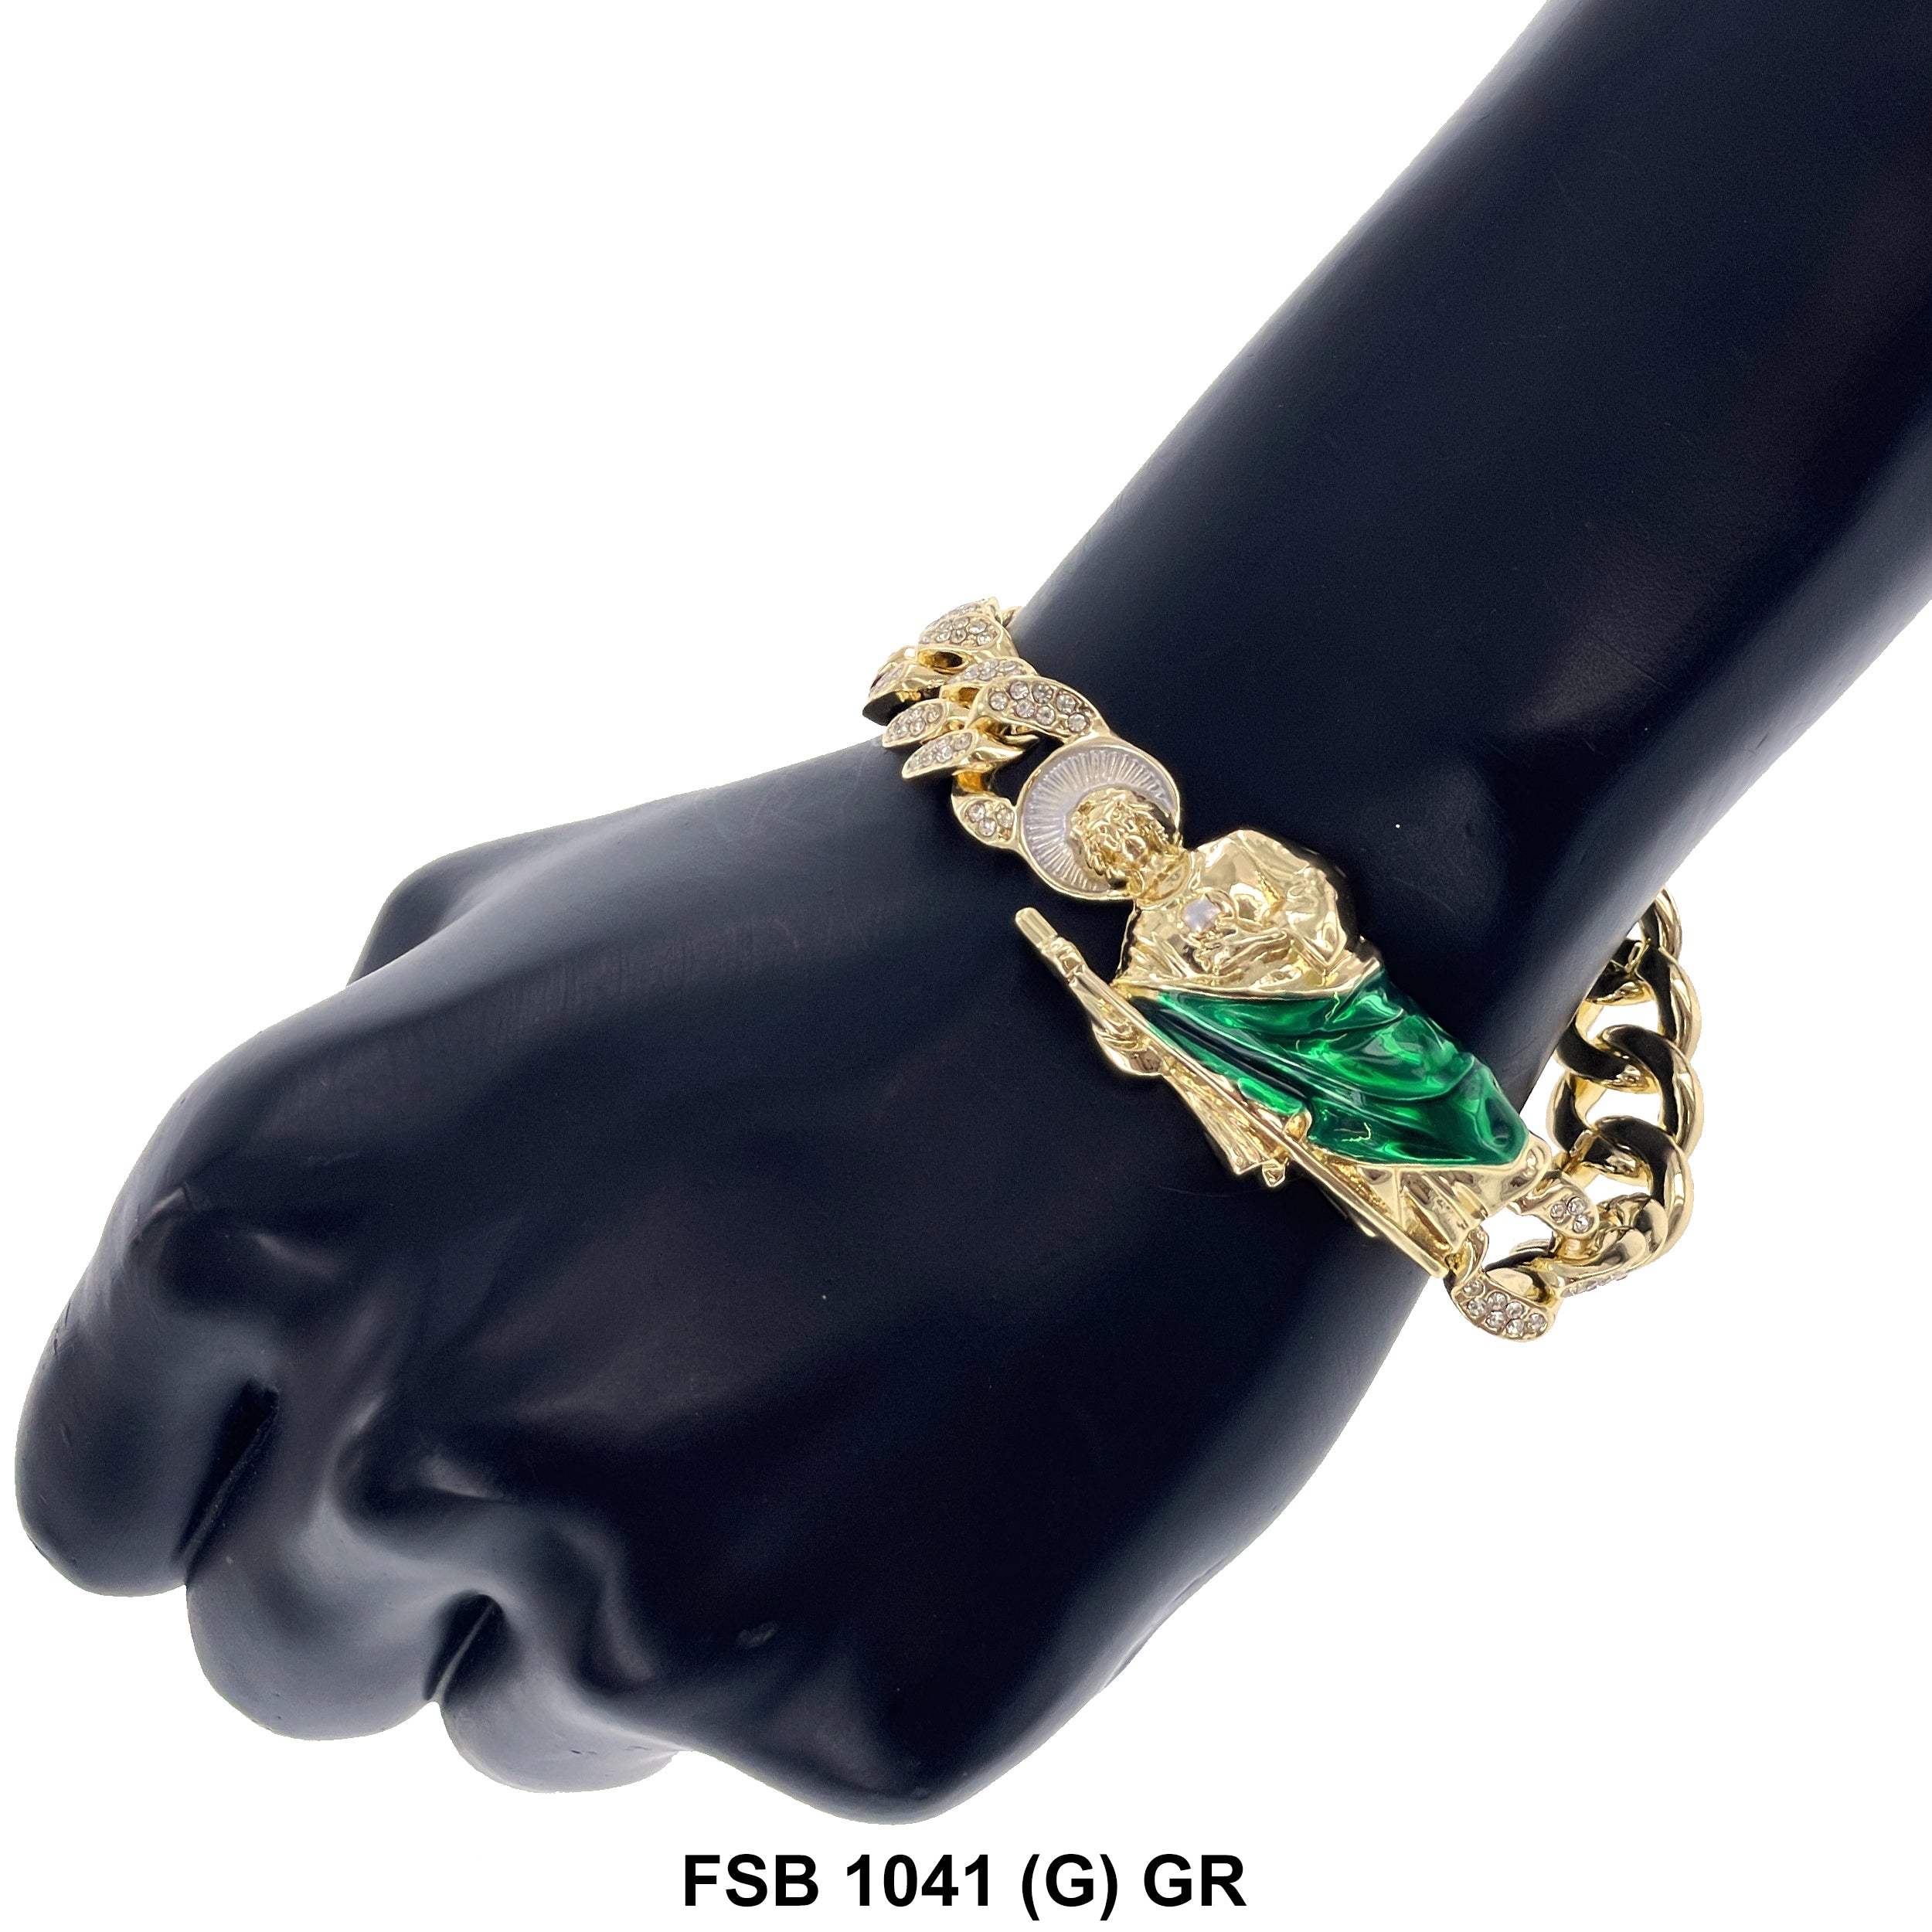 San Judas Bracelet FSB 1041 (G) GR